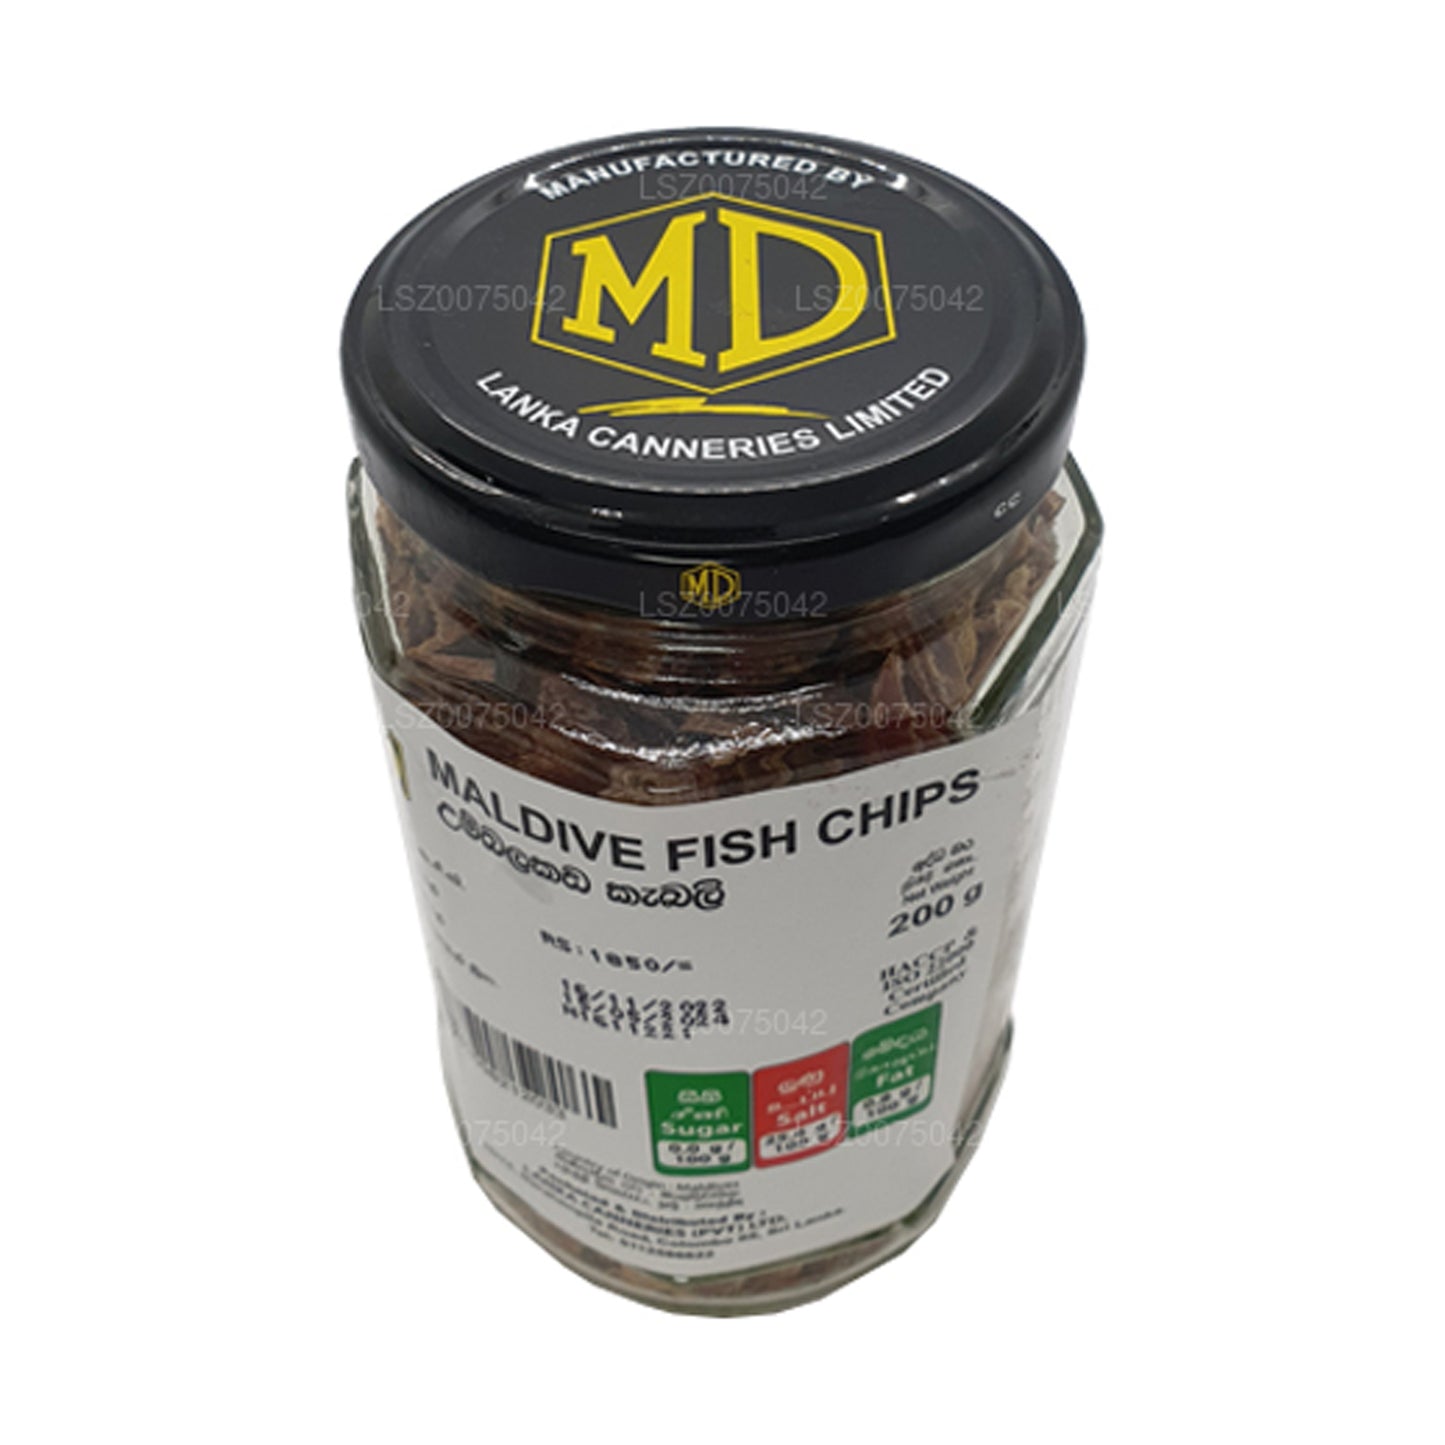 MD Maldive Fish Chips Bottle (200g)